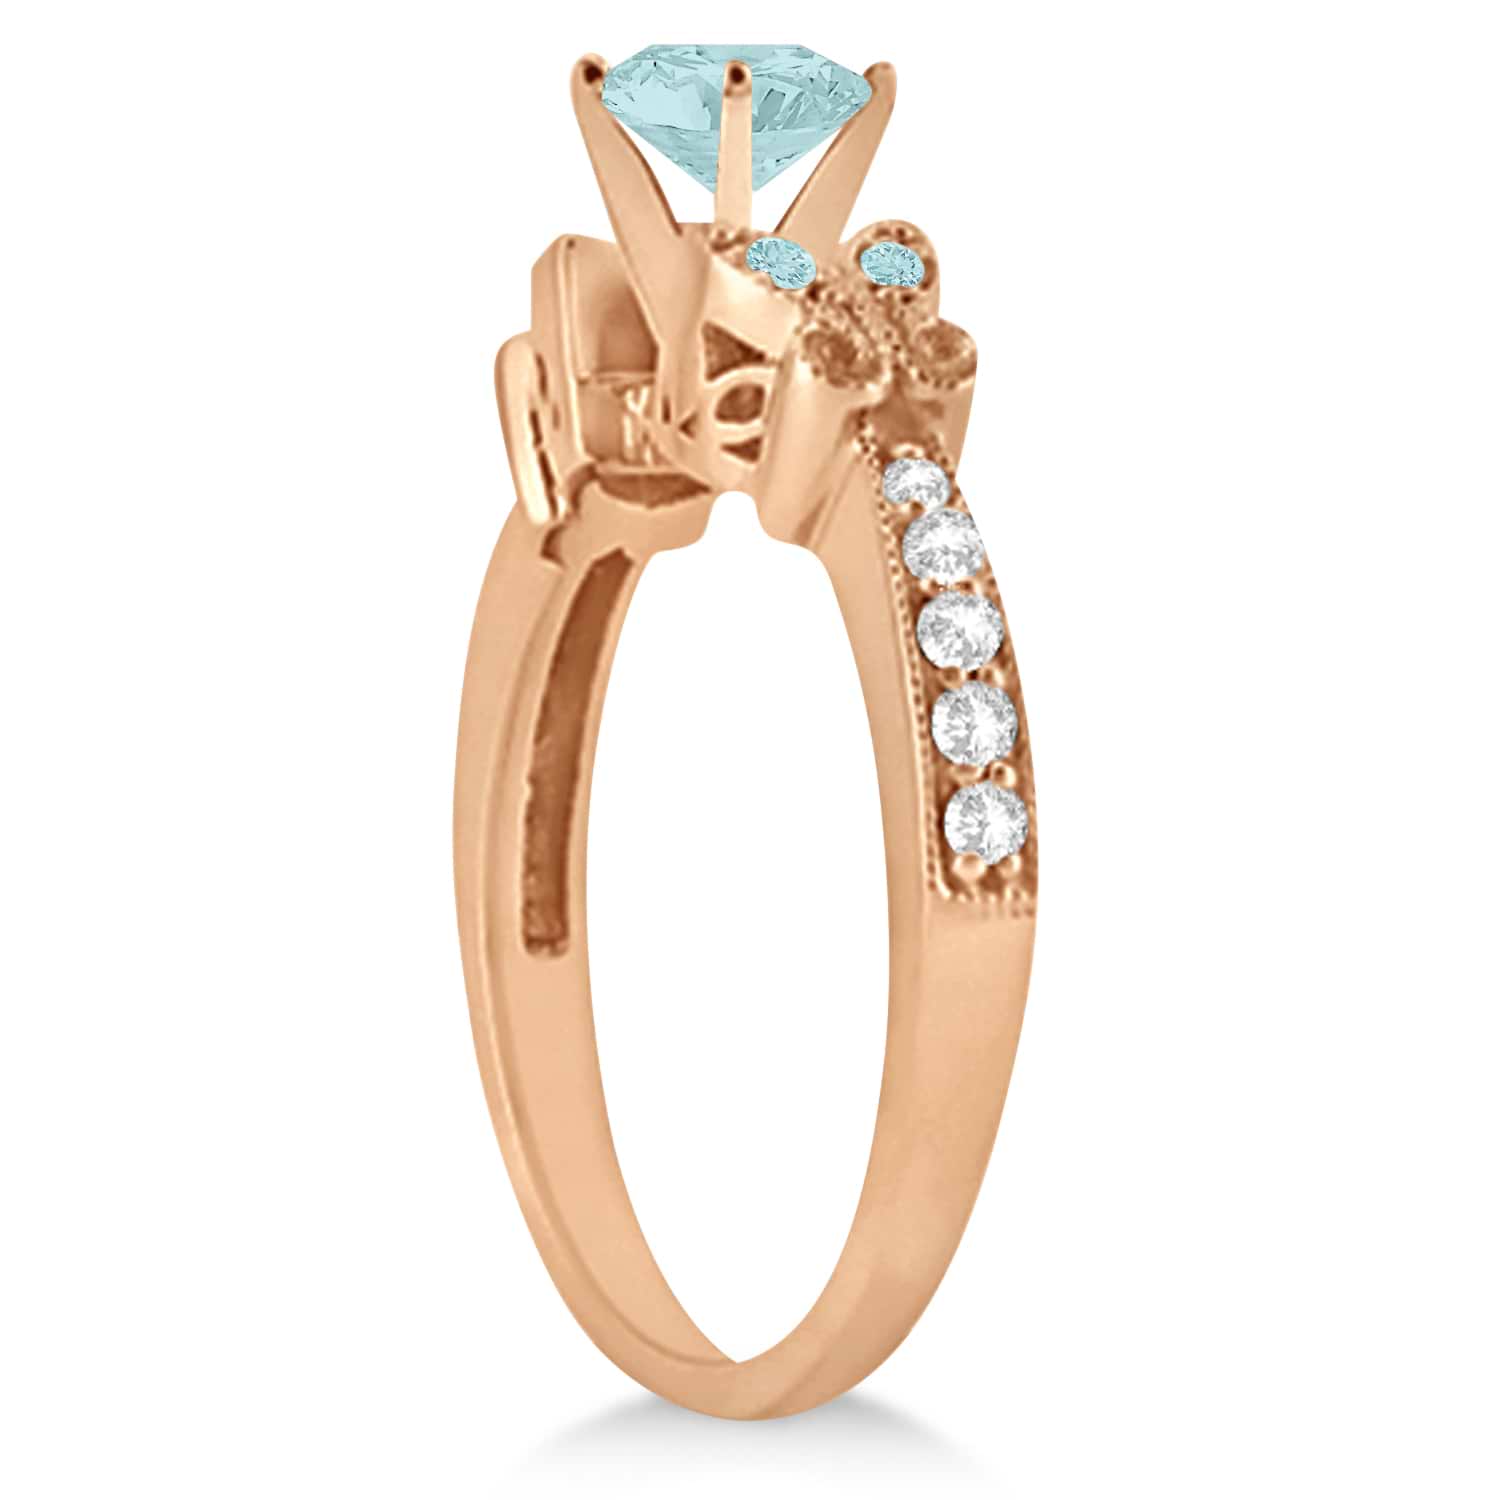 Preset Butterfly Aquamarine & Diamond Engagement Ring 14K Rose Gold 1.23ct